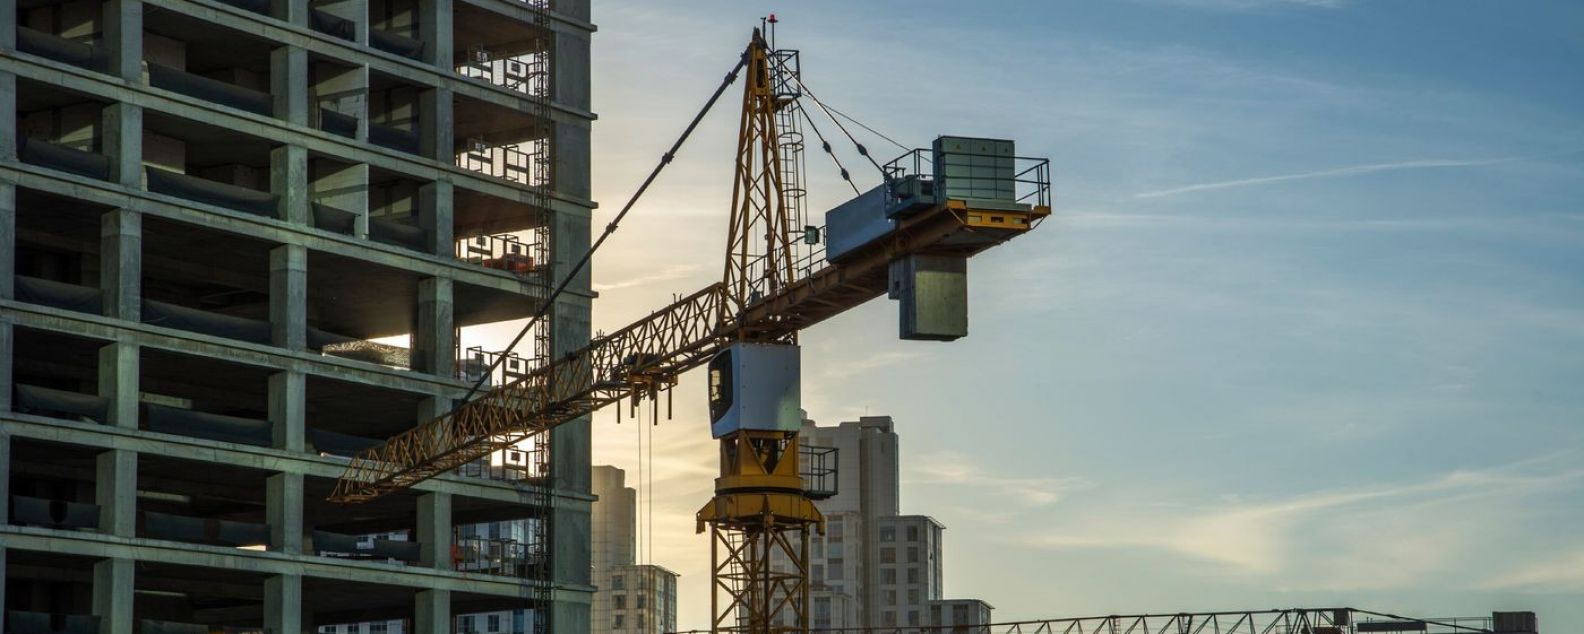 Top half of construction crane against a building